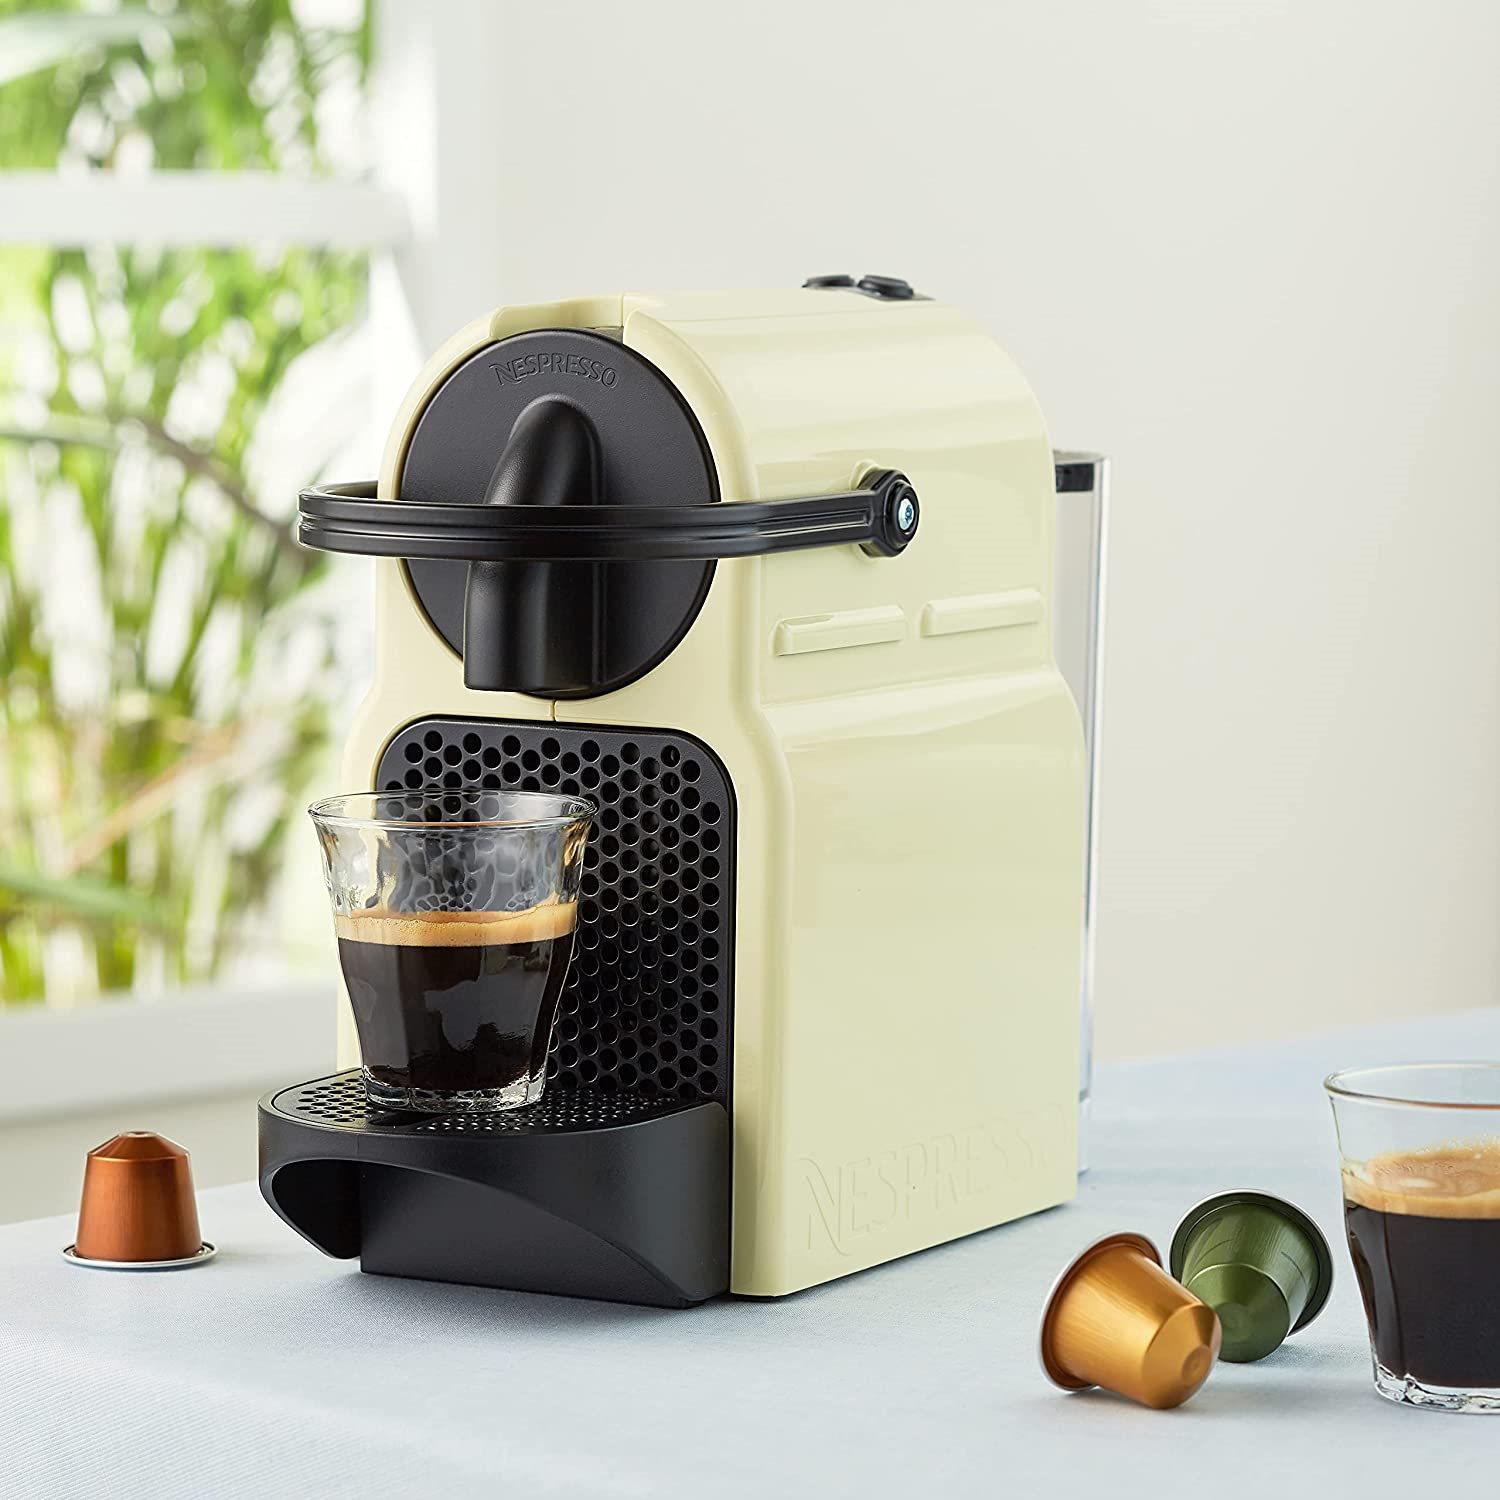 De´Longhi EN80.CW INISSIA Nespresso Kaffeekapselmaschine 0,7l, Vanilla Cream